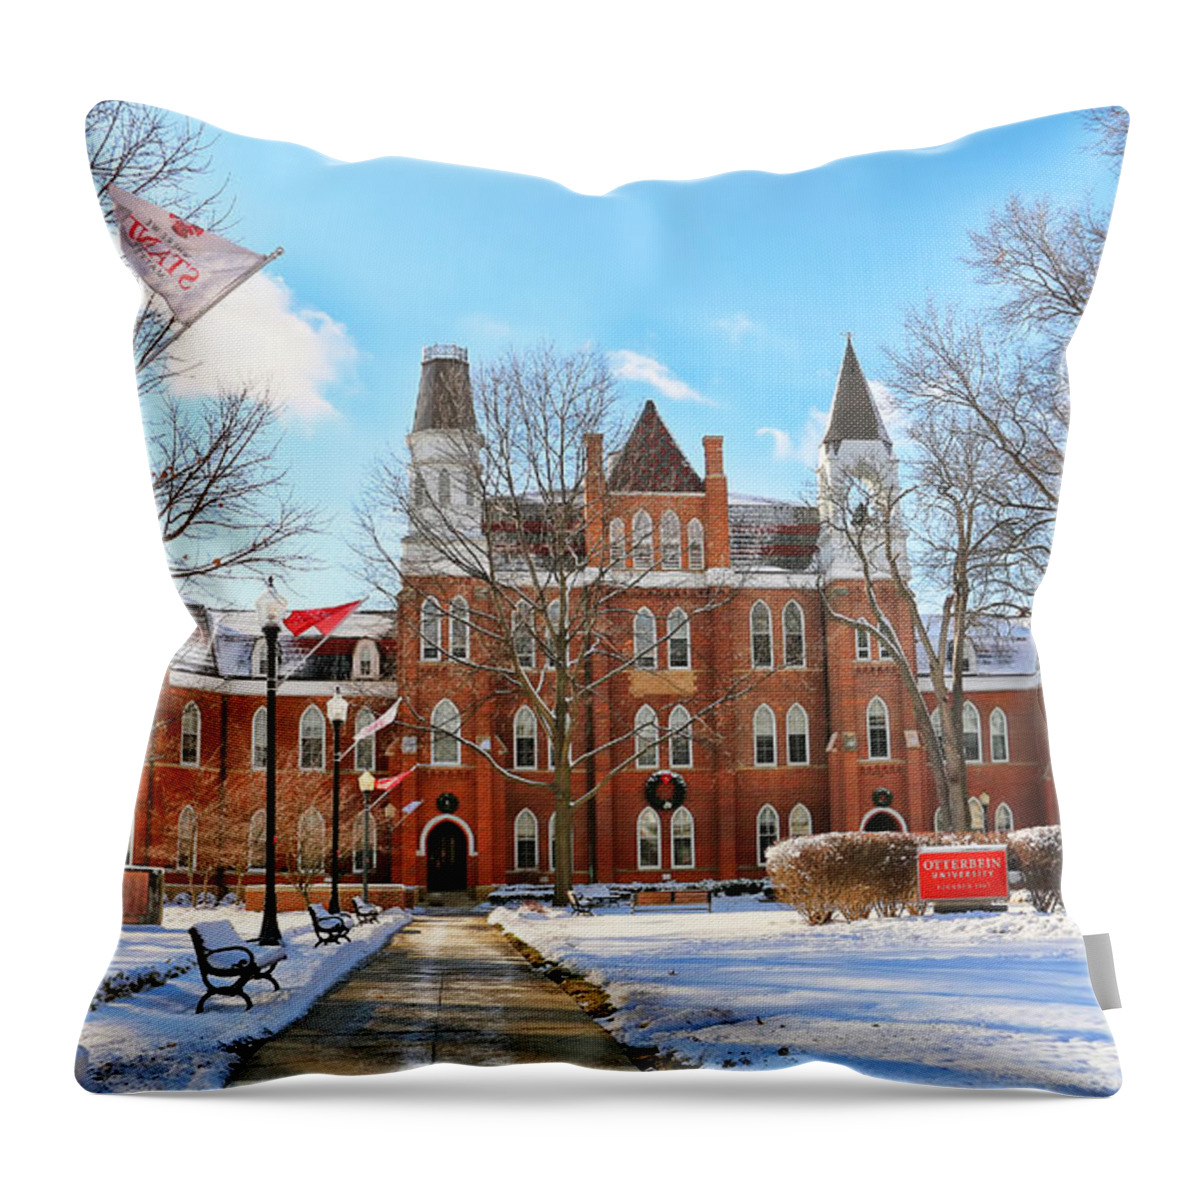 Otterbein University Throw Pillow featuring the photograph Otterbein University in Snow 7458 by Jack Schultz